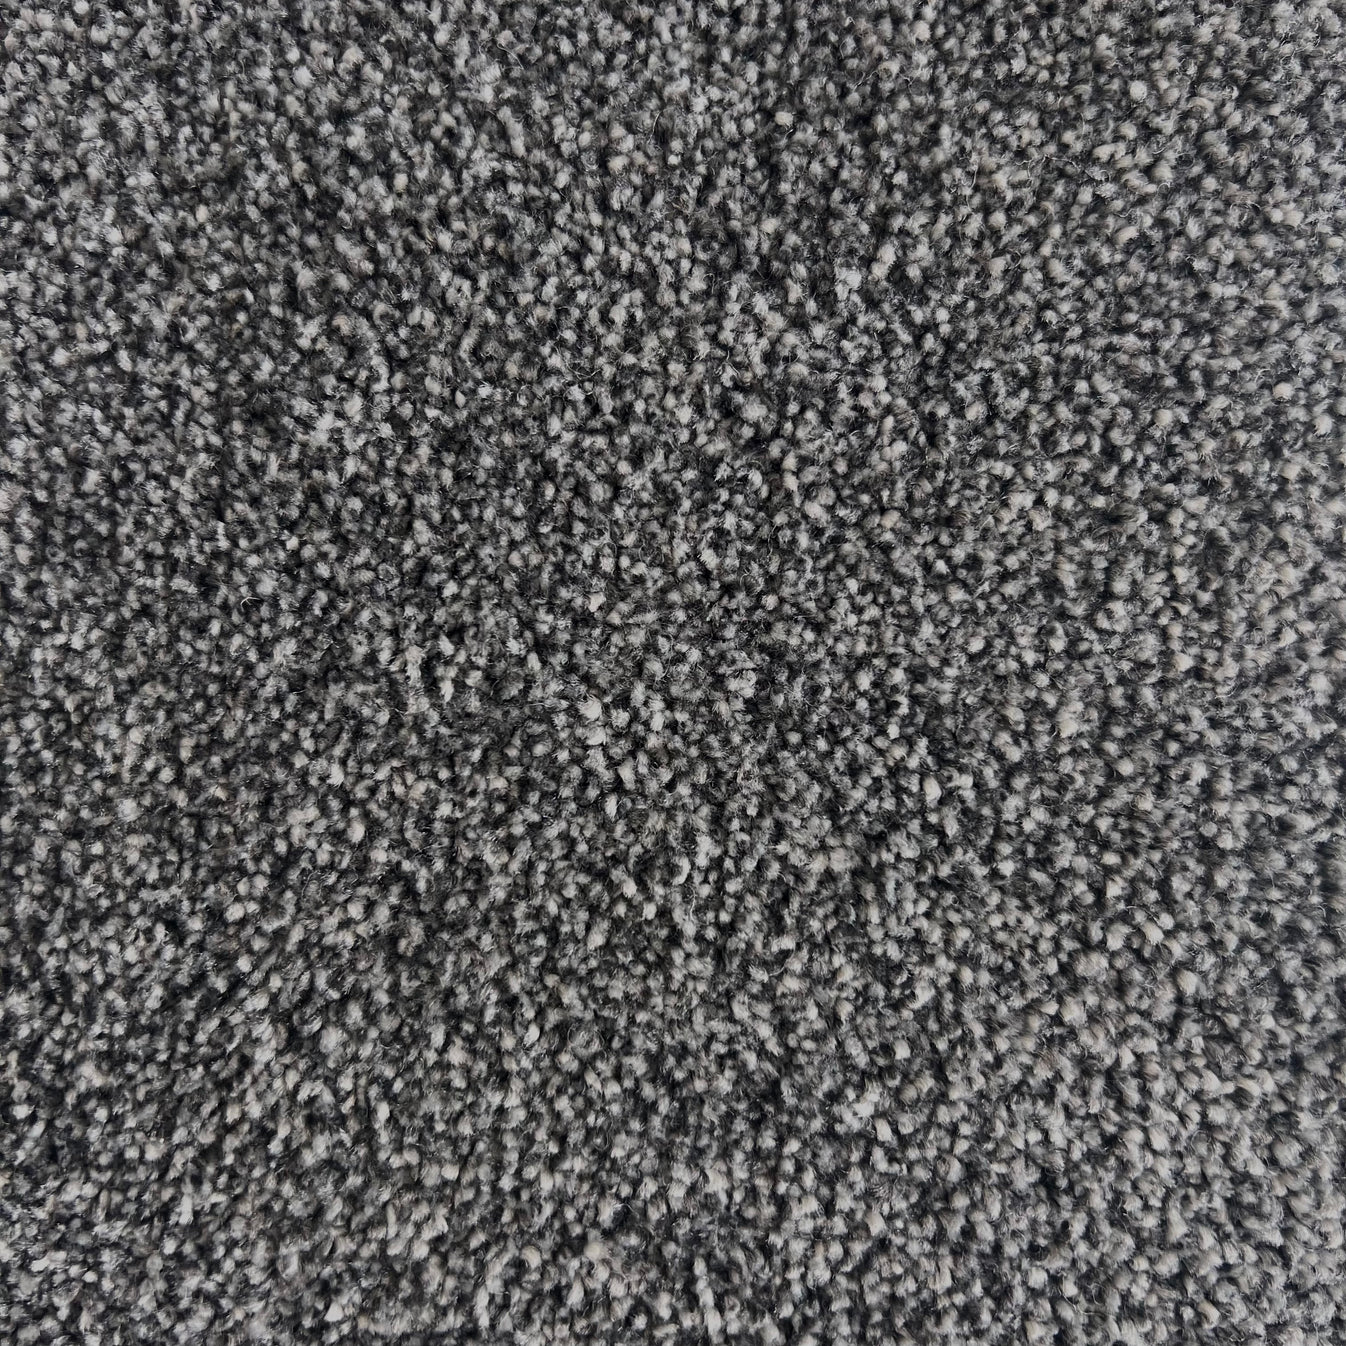 Optimize Dark Grey 5 x 4 m Roll End Carpet